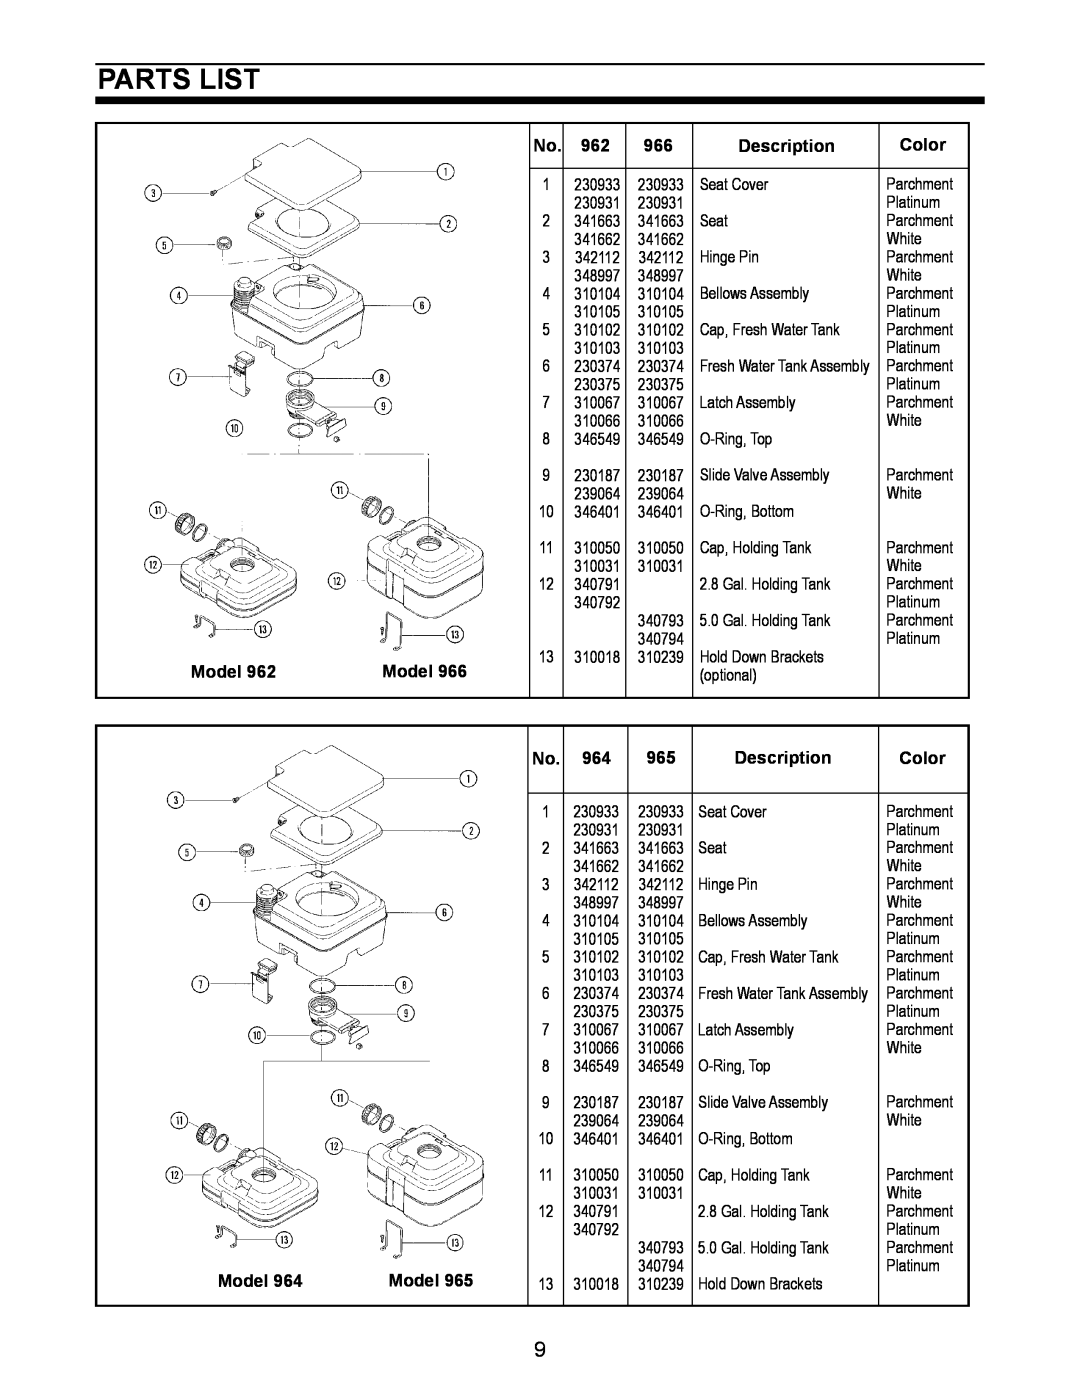 Dometic 962, 966 owner manual parts list, Description, Color, Model 